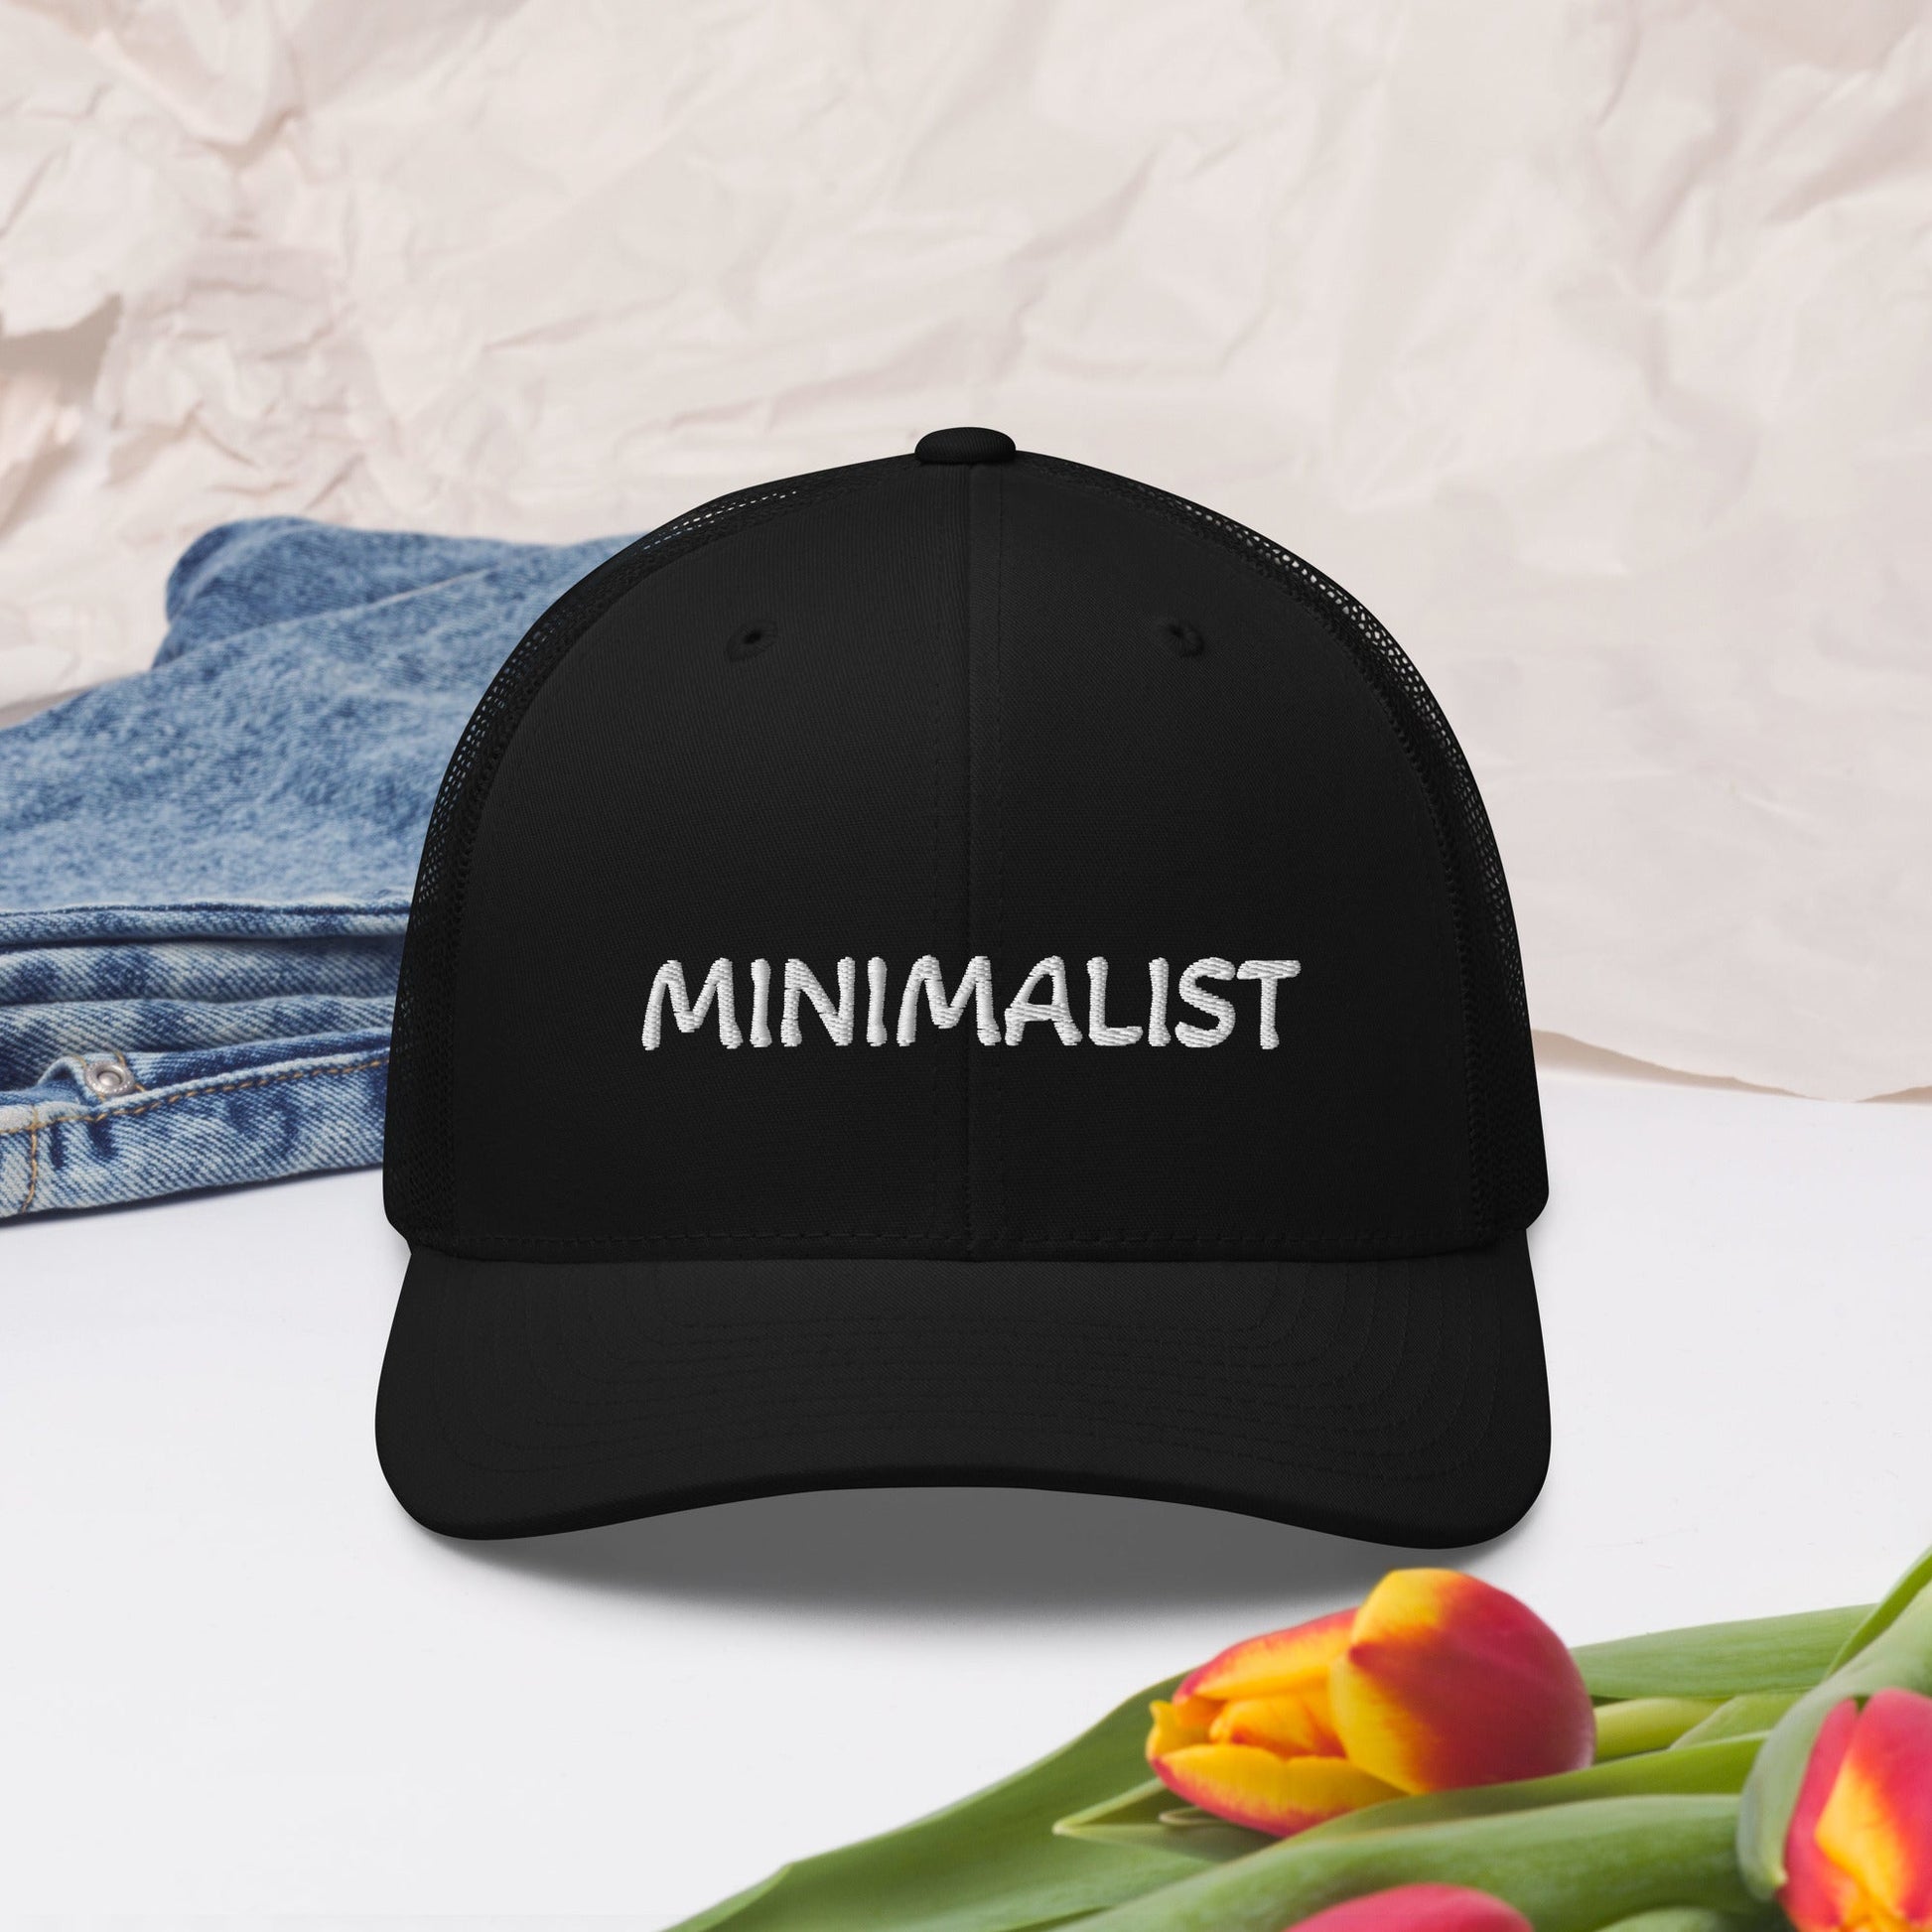 MINIMALIST - Trucker Cap - Albasat Designs